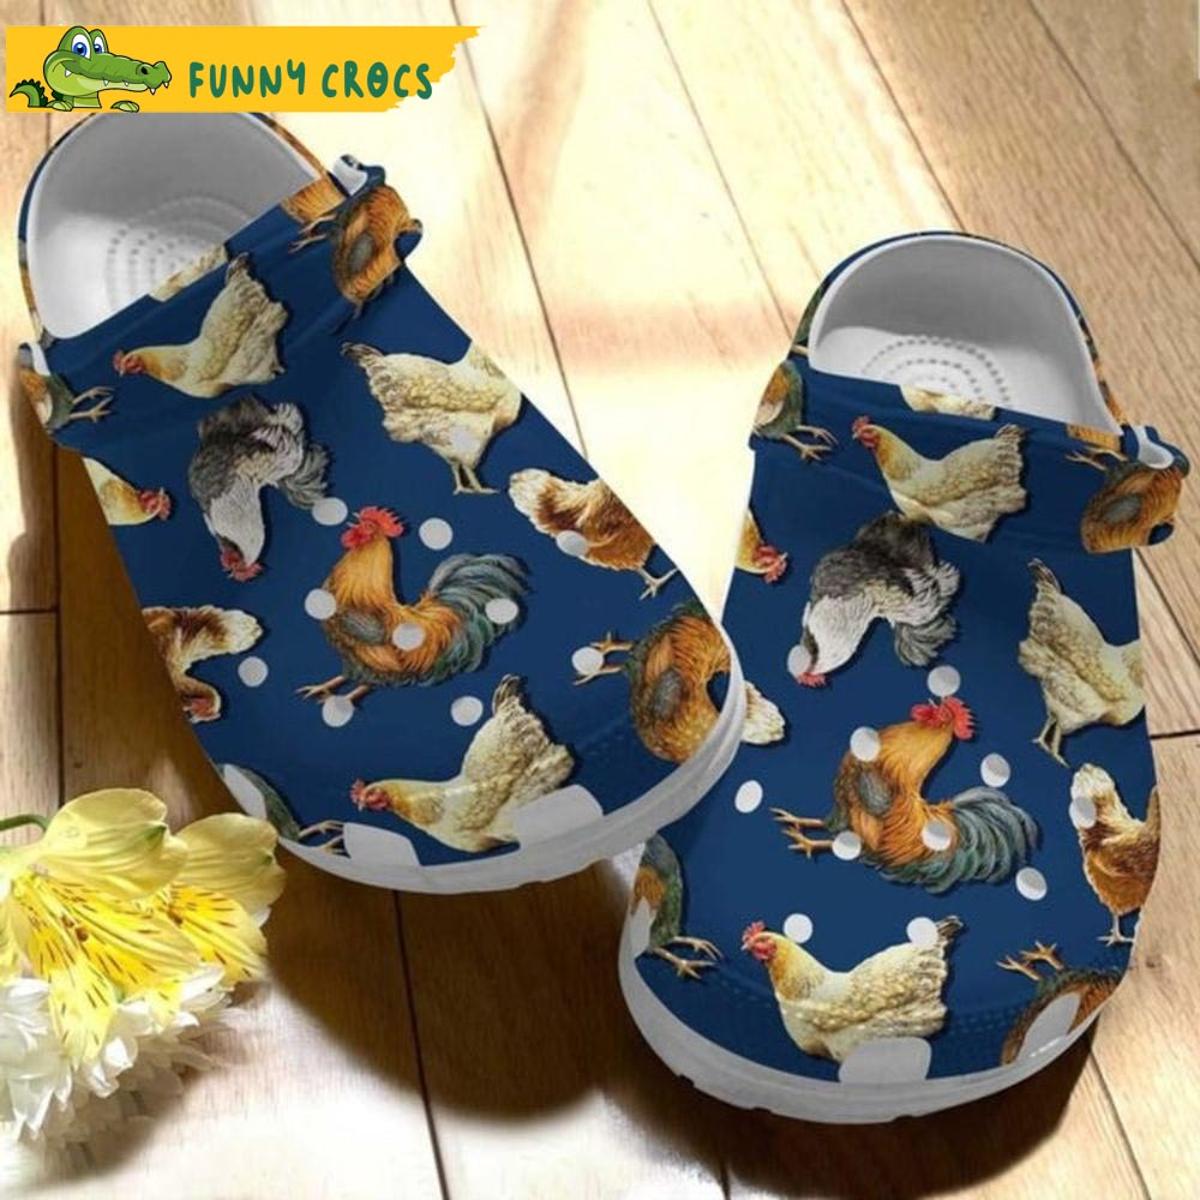 Cute Design Chicken Crocs Sandals